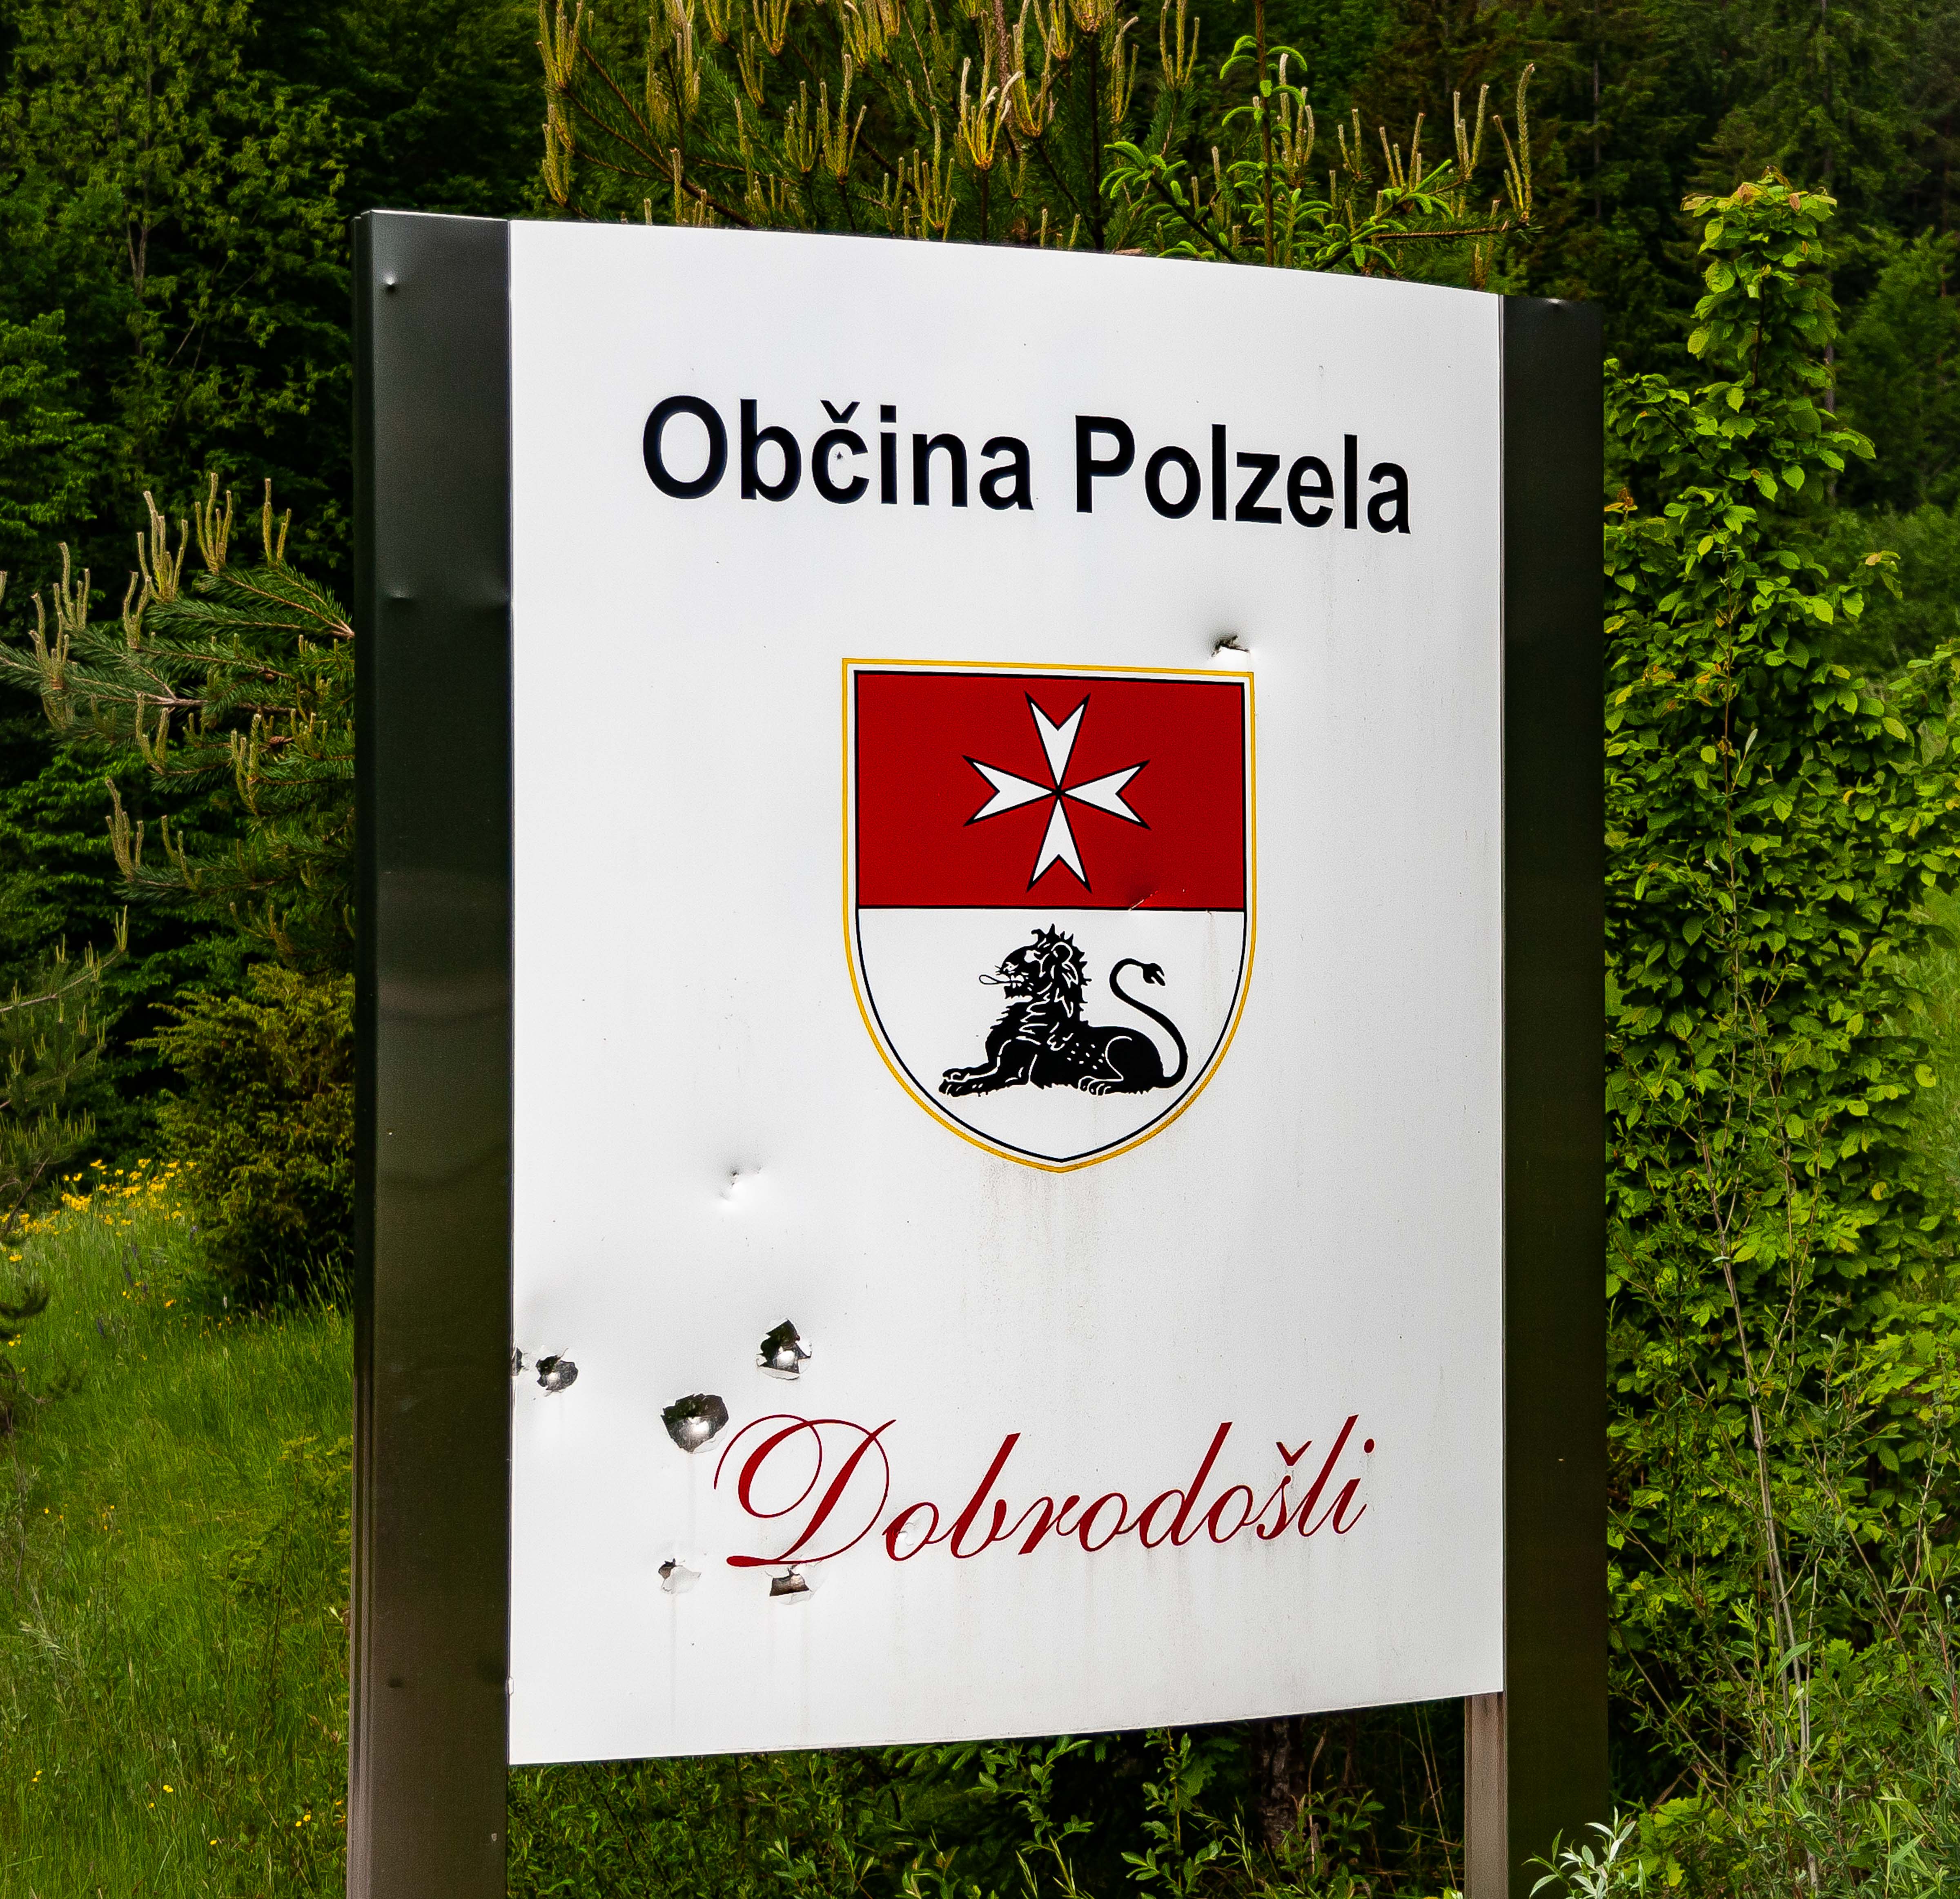 Slovenia, Polzela Prov, Dobrodosli Obcina Polzela, 2006, IMG 8126